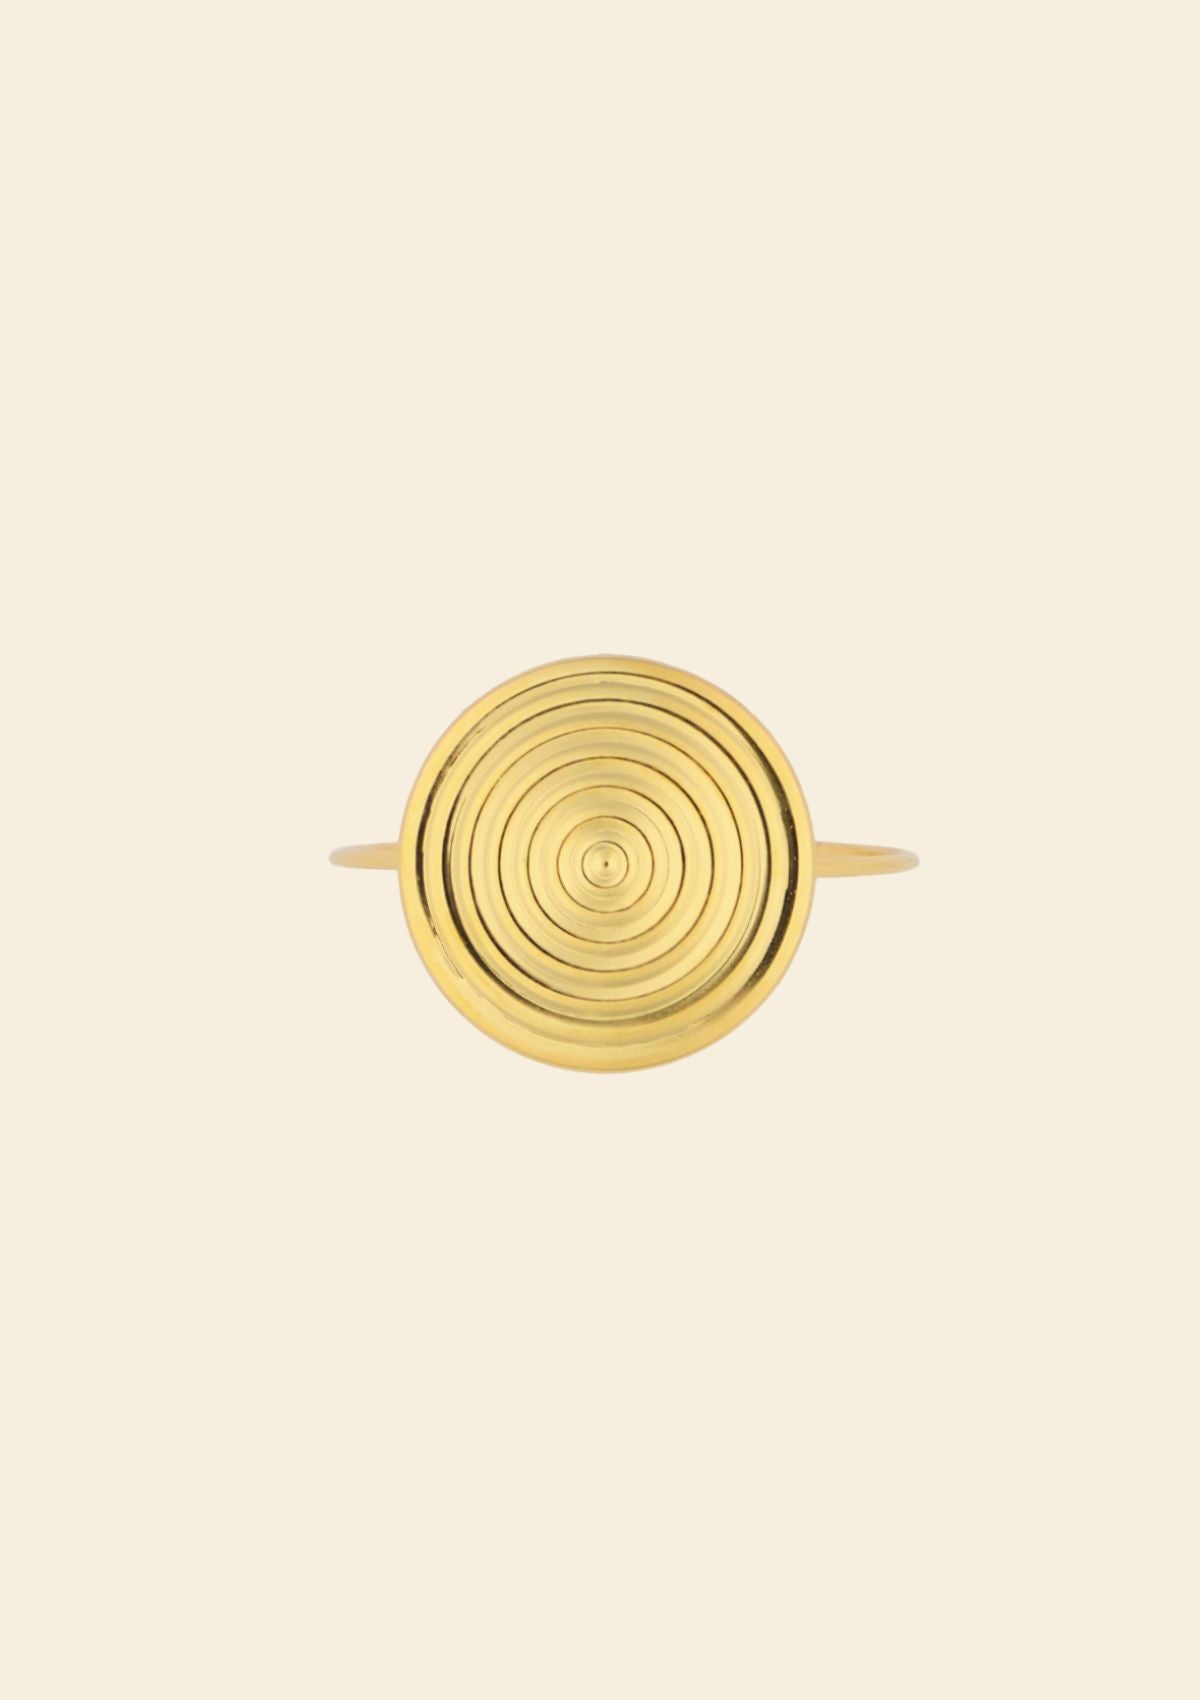 The Spirale gold jewel napkin ring